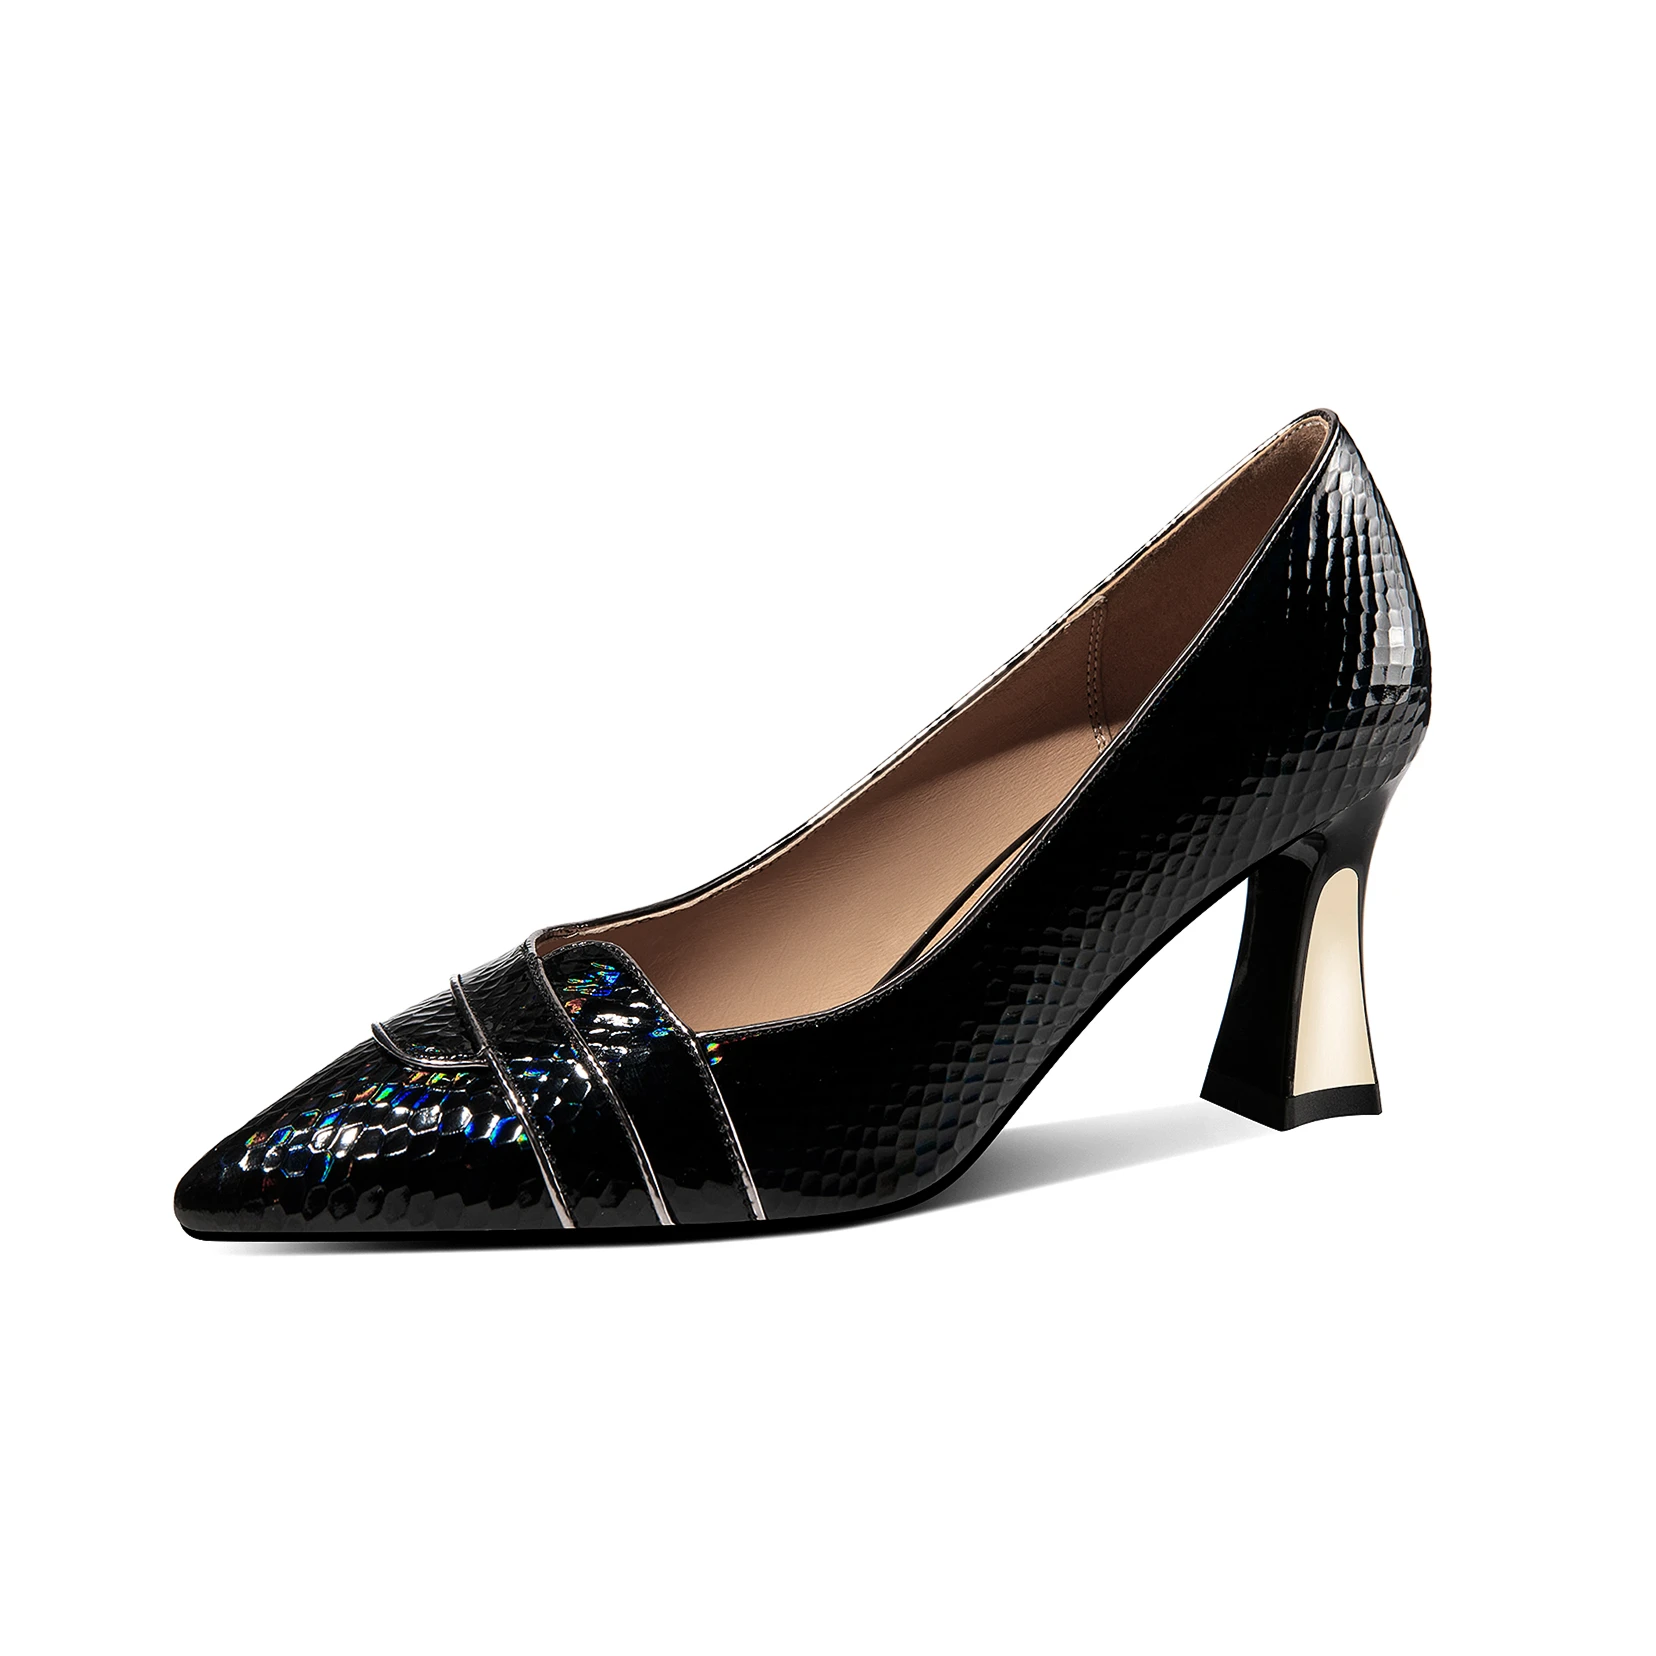 

Mstyle Snakeskin Patent Leather Pumps for Women Elegant Pointed Toe High Spool Heel Handmade Black Beige Ladies Heeled Shoes